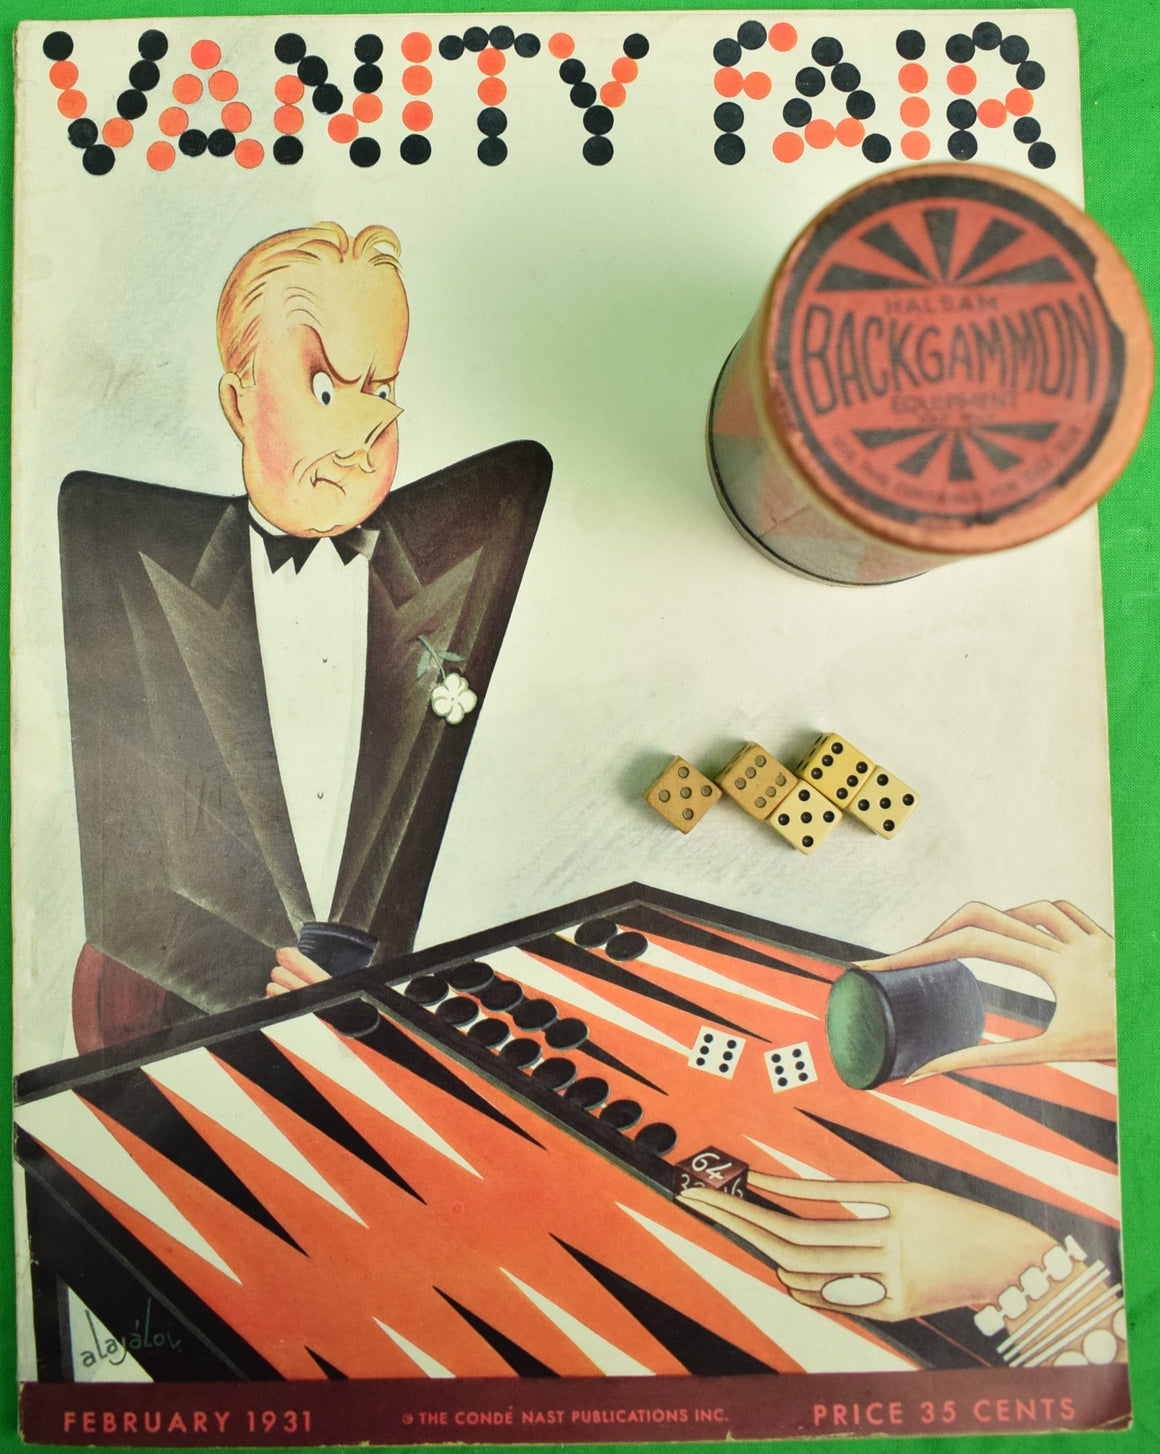 "Halsan Backgammon c1930s Dice Cup" (SOLD)